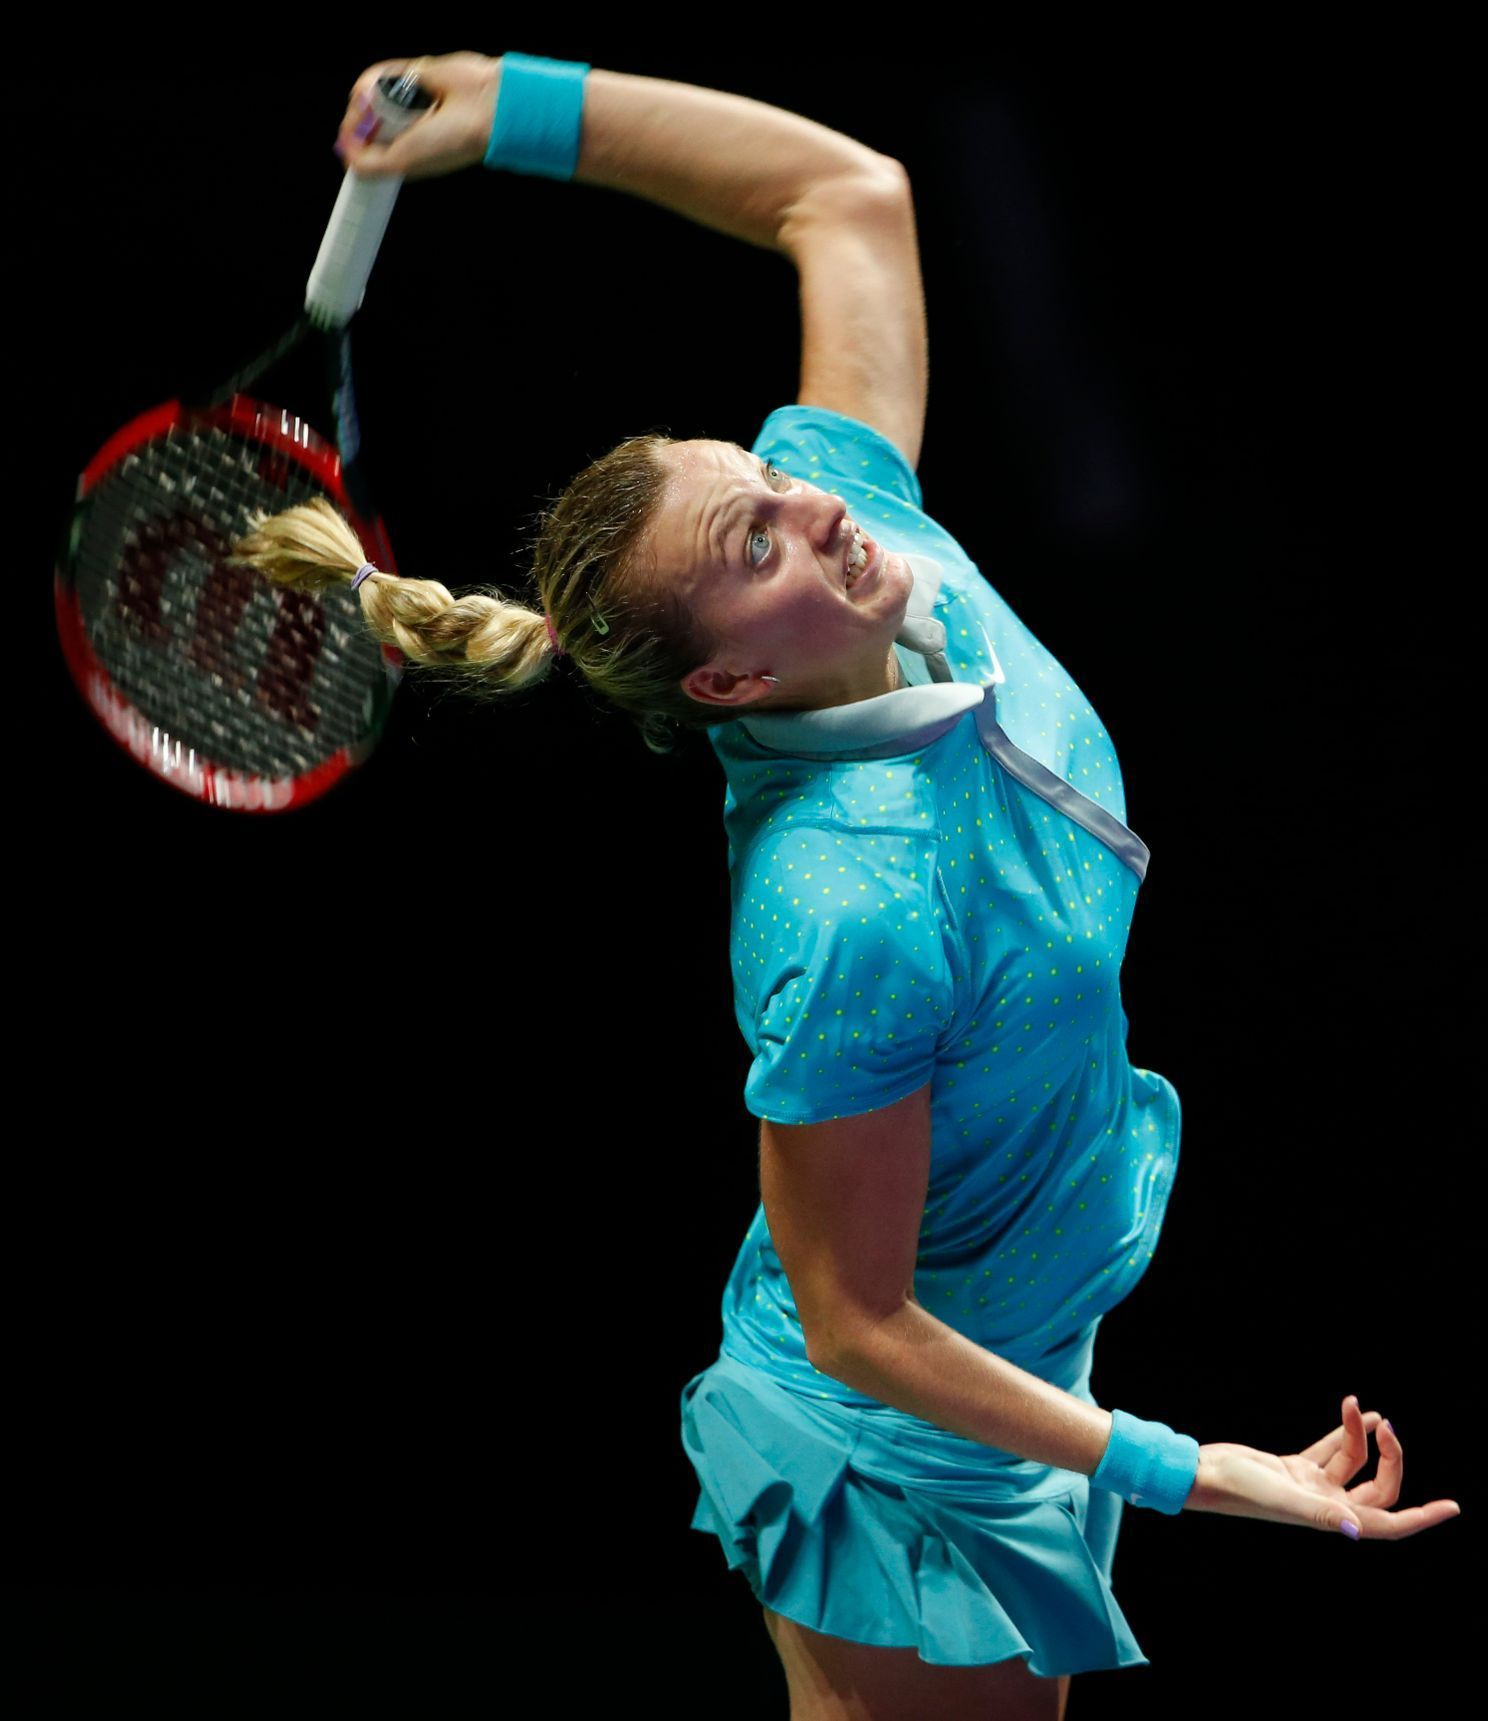 Kvitova of the Czech Republic serves against Radwanska of Poland during their WTA Finals singles tennis match at the Singapore Indoor Stadium